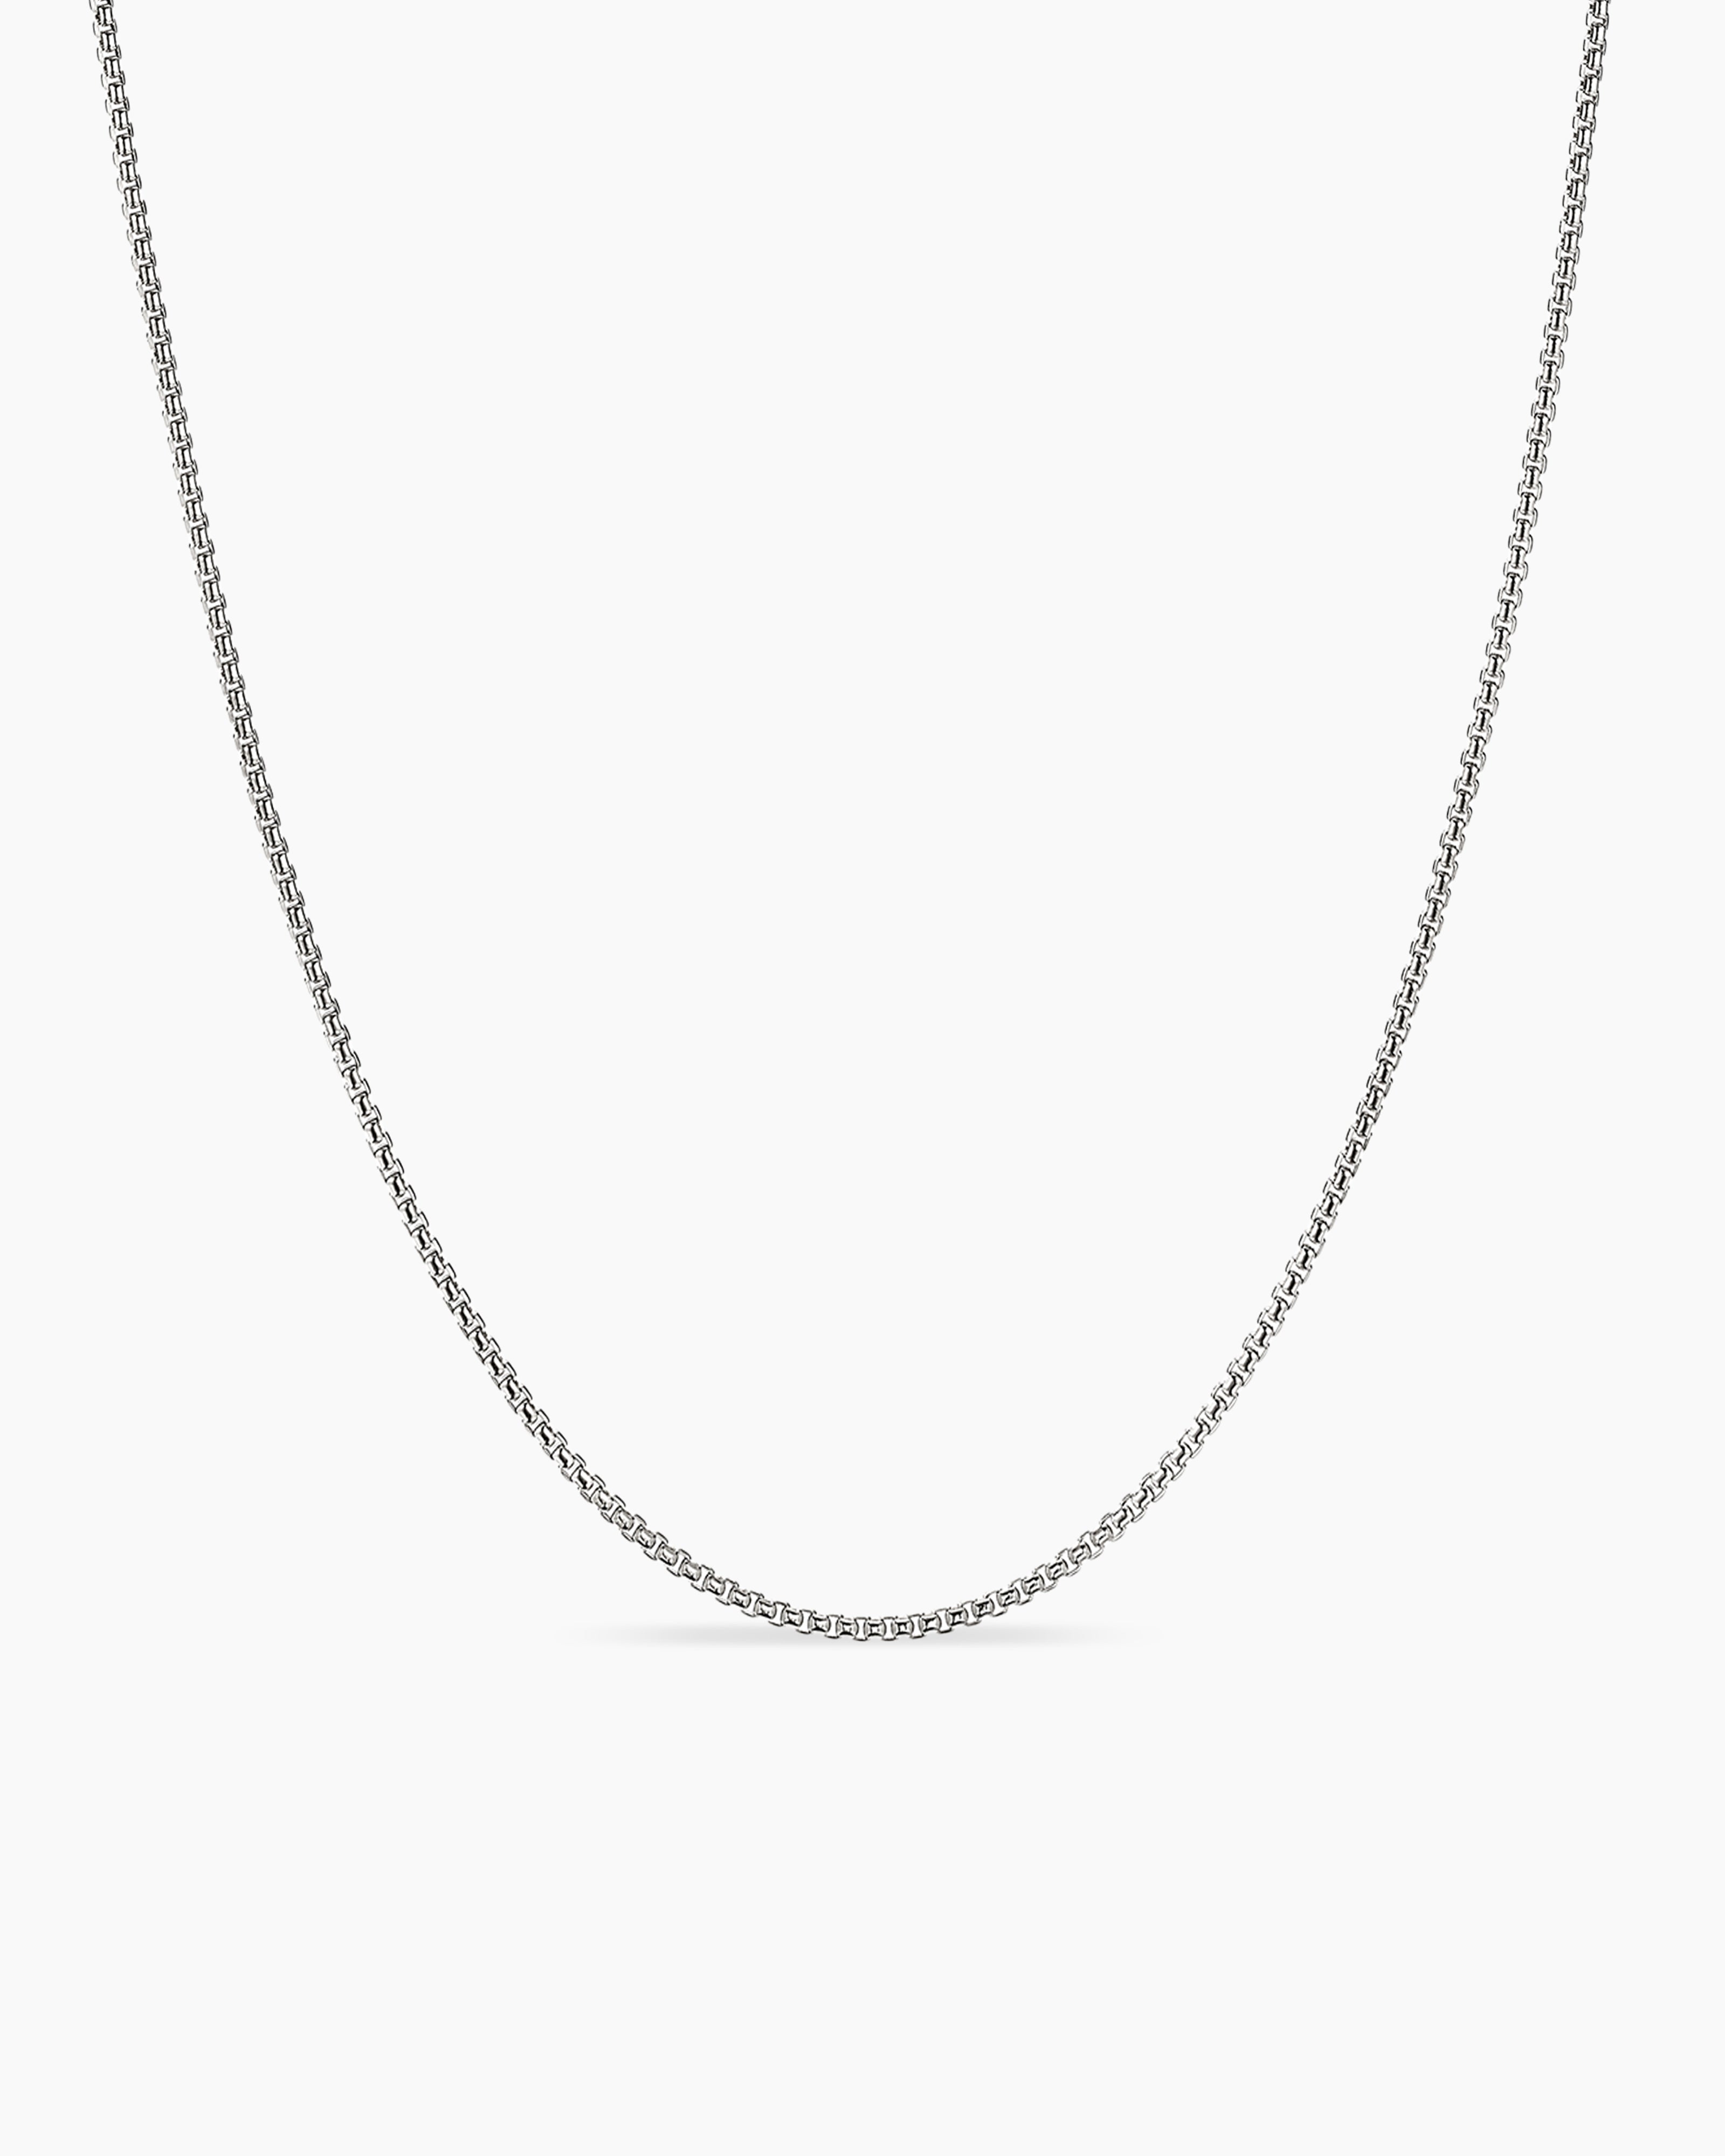 Solid Platinum Branch Bar Charm Pendant Chain Necklace Adjustable